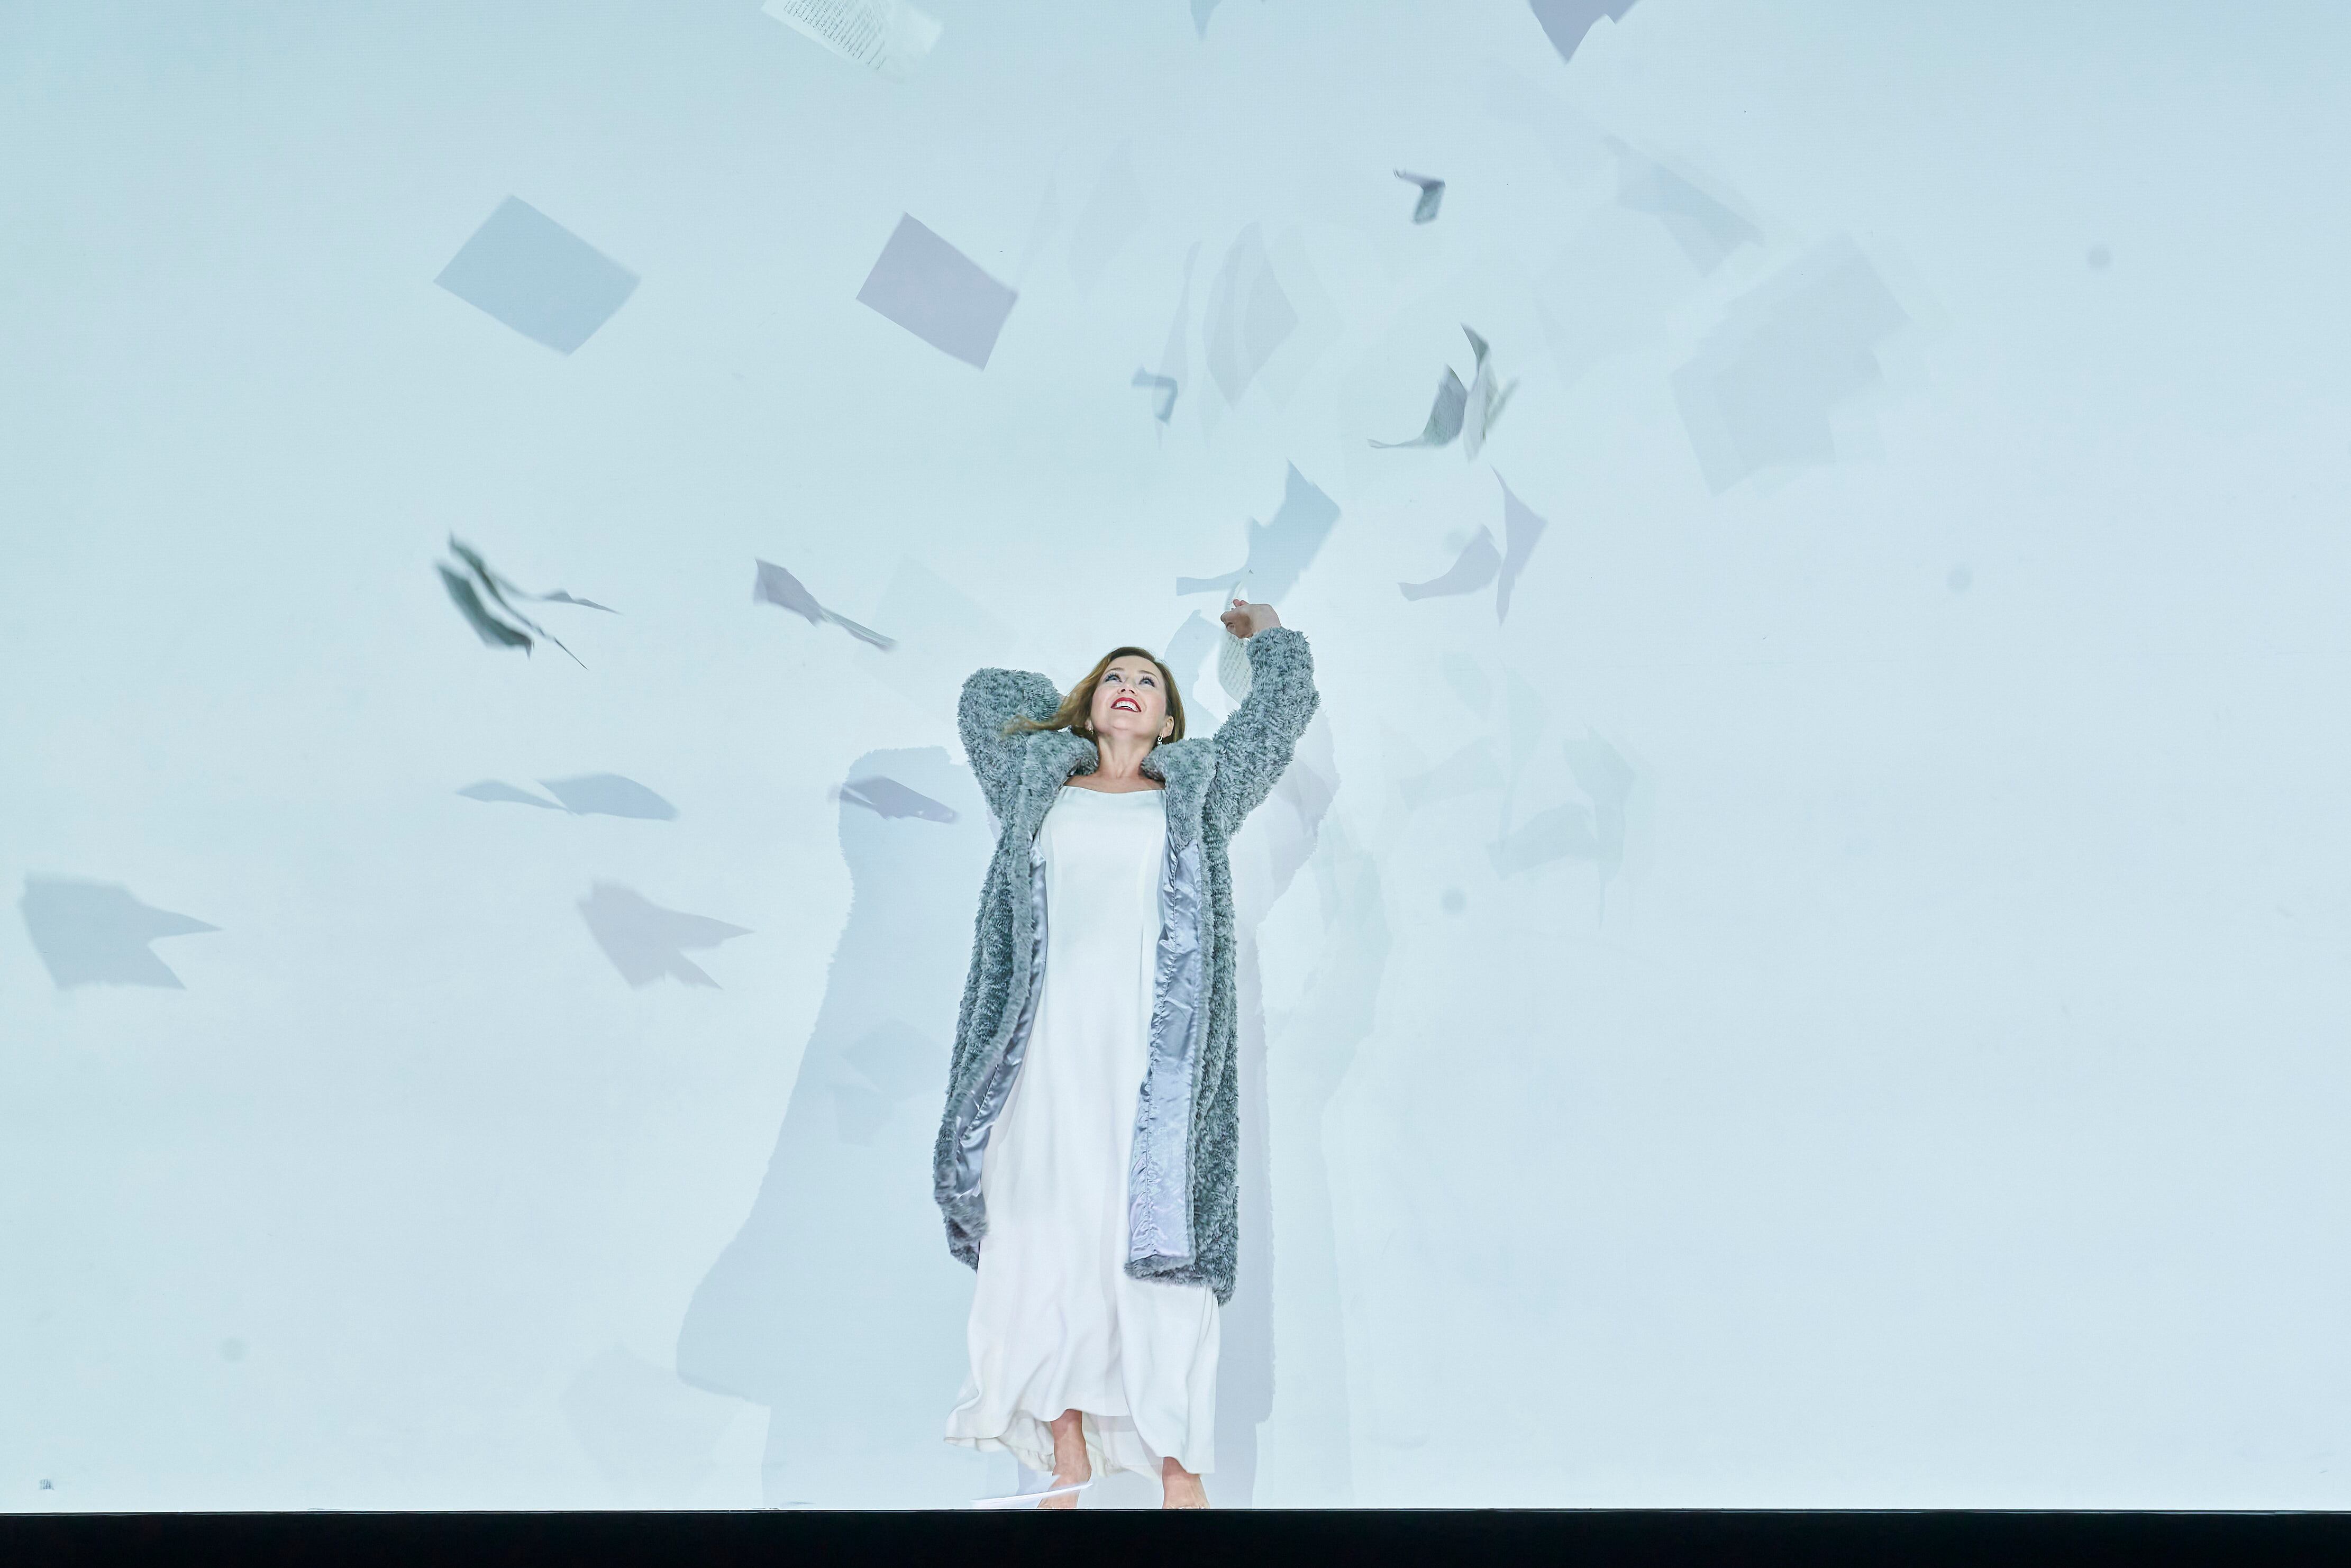 La soprano Svetlana Aksenova lanza la cartas de Onegin en la escena final de ‘Eugene Onegin’.